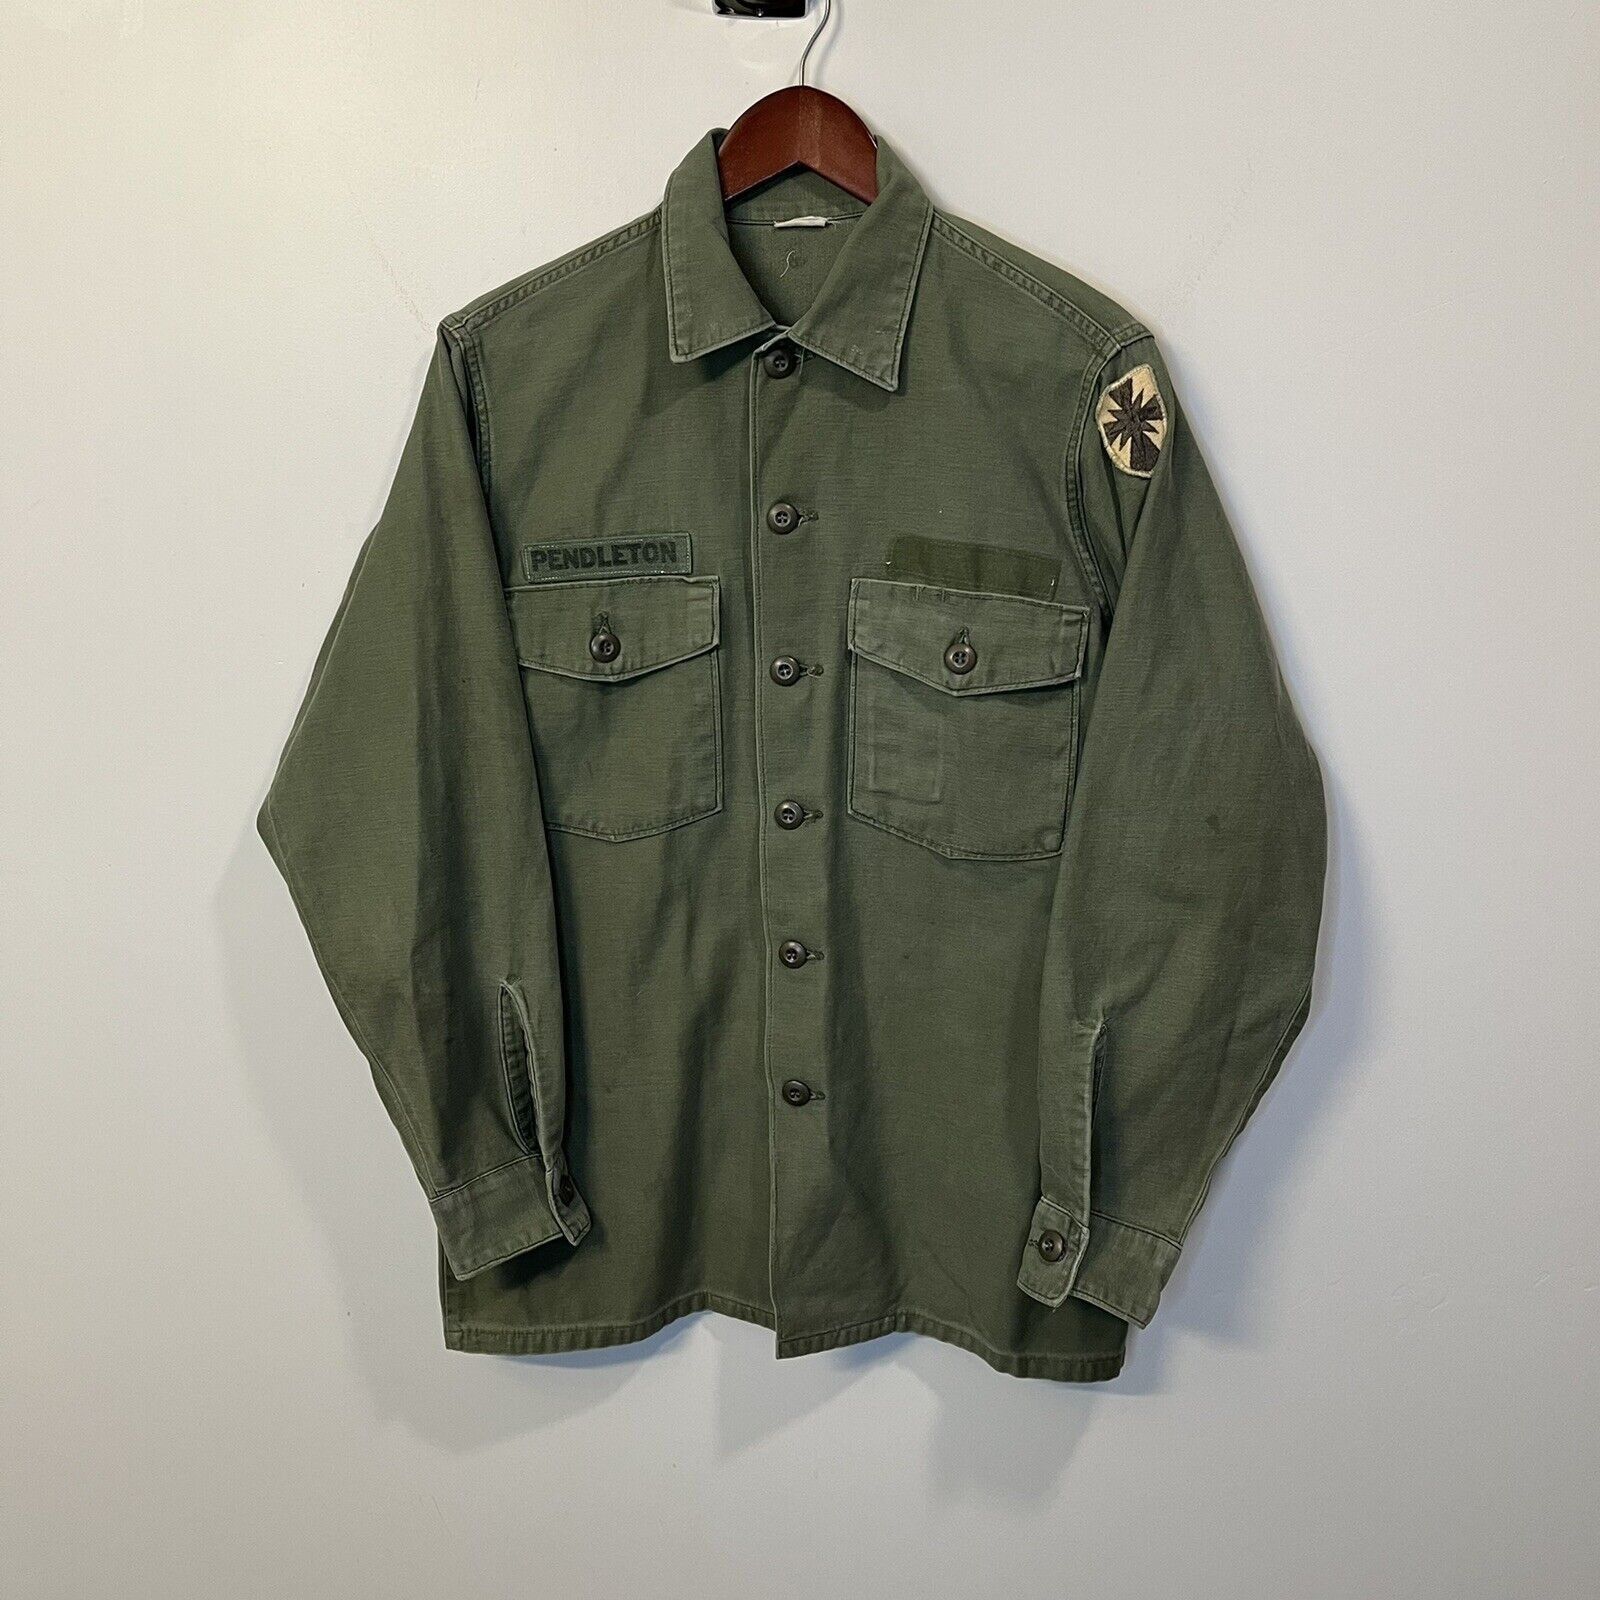 Vintage Vintage US Military OD Green Uniform Shirt Size US L / EU 52-54 / 3 - 1 Preview